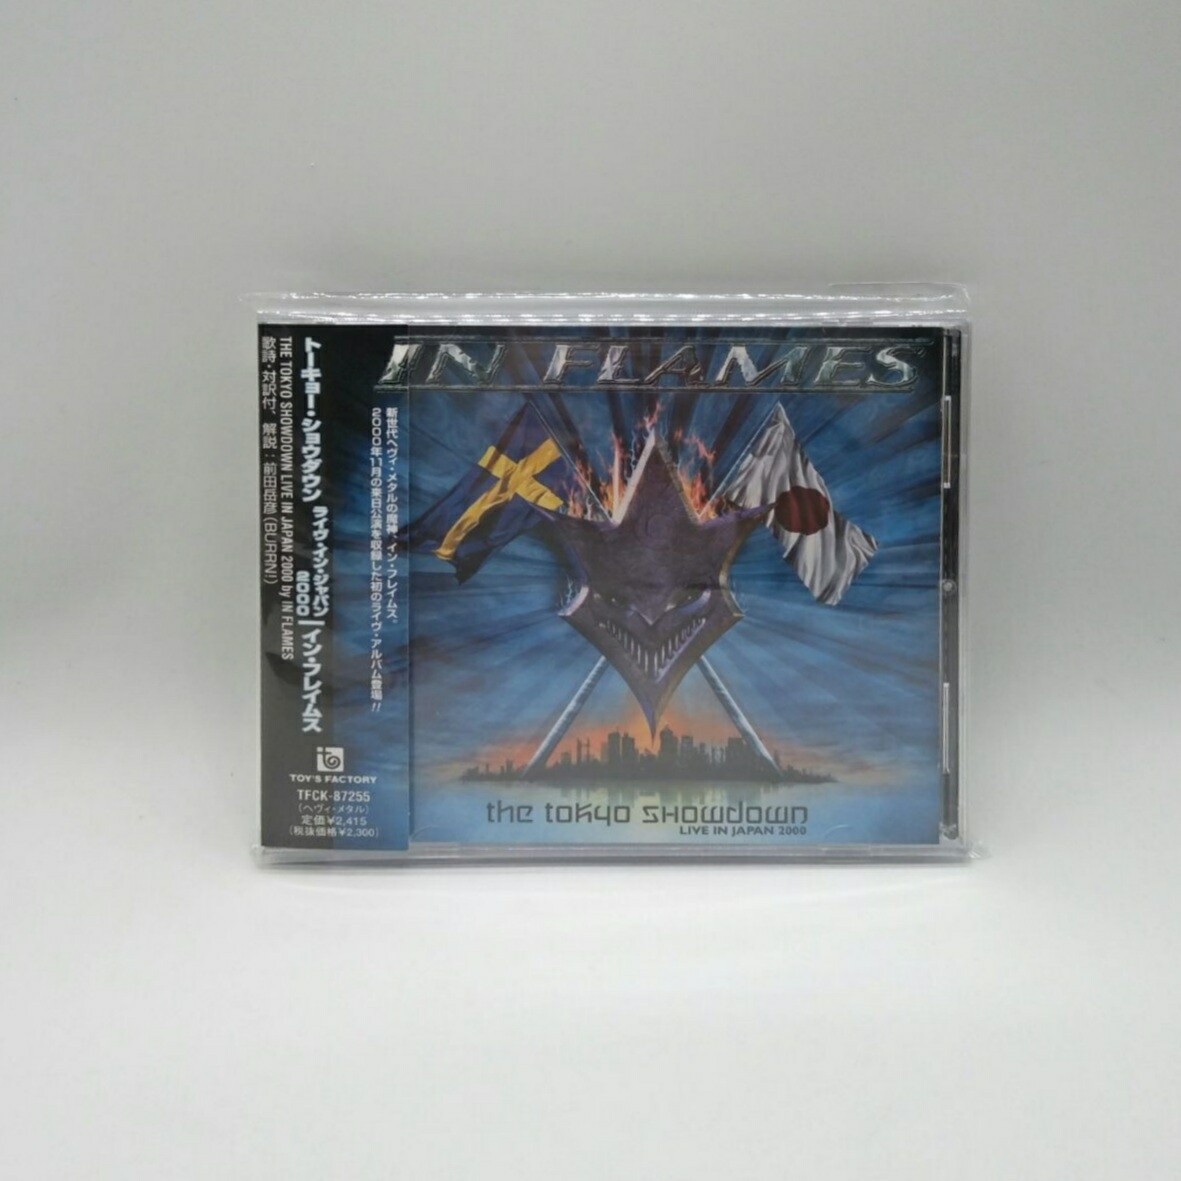 [USED] IN FLAMES -THE TOKYO SHOWDOWN: LIVE IN JAPAN 2000- CD (JAPAN PRESS)